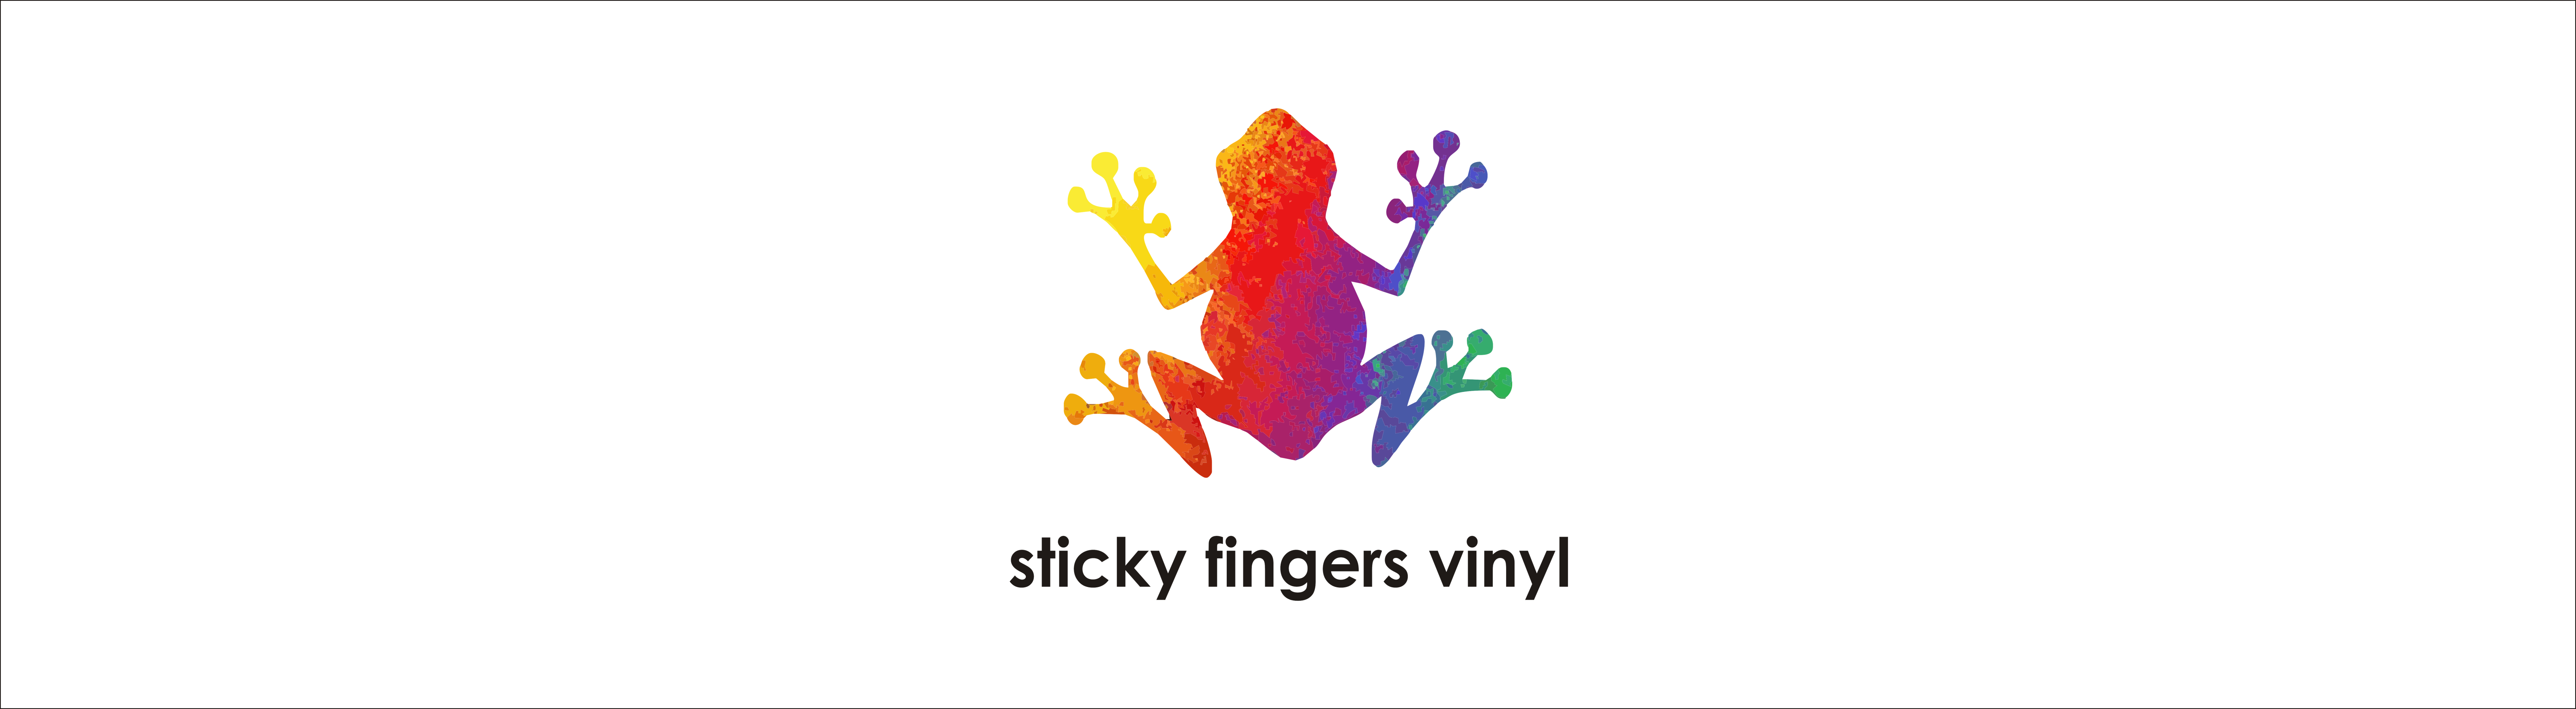 Sticky Fingers Vinyl & Transfers